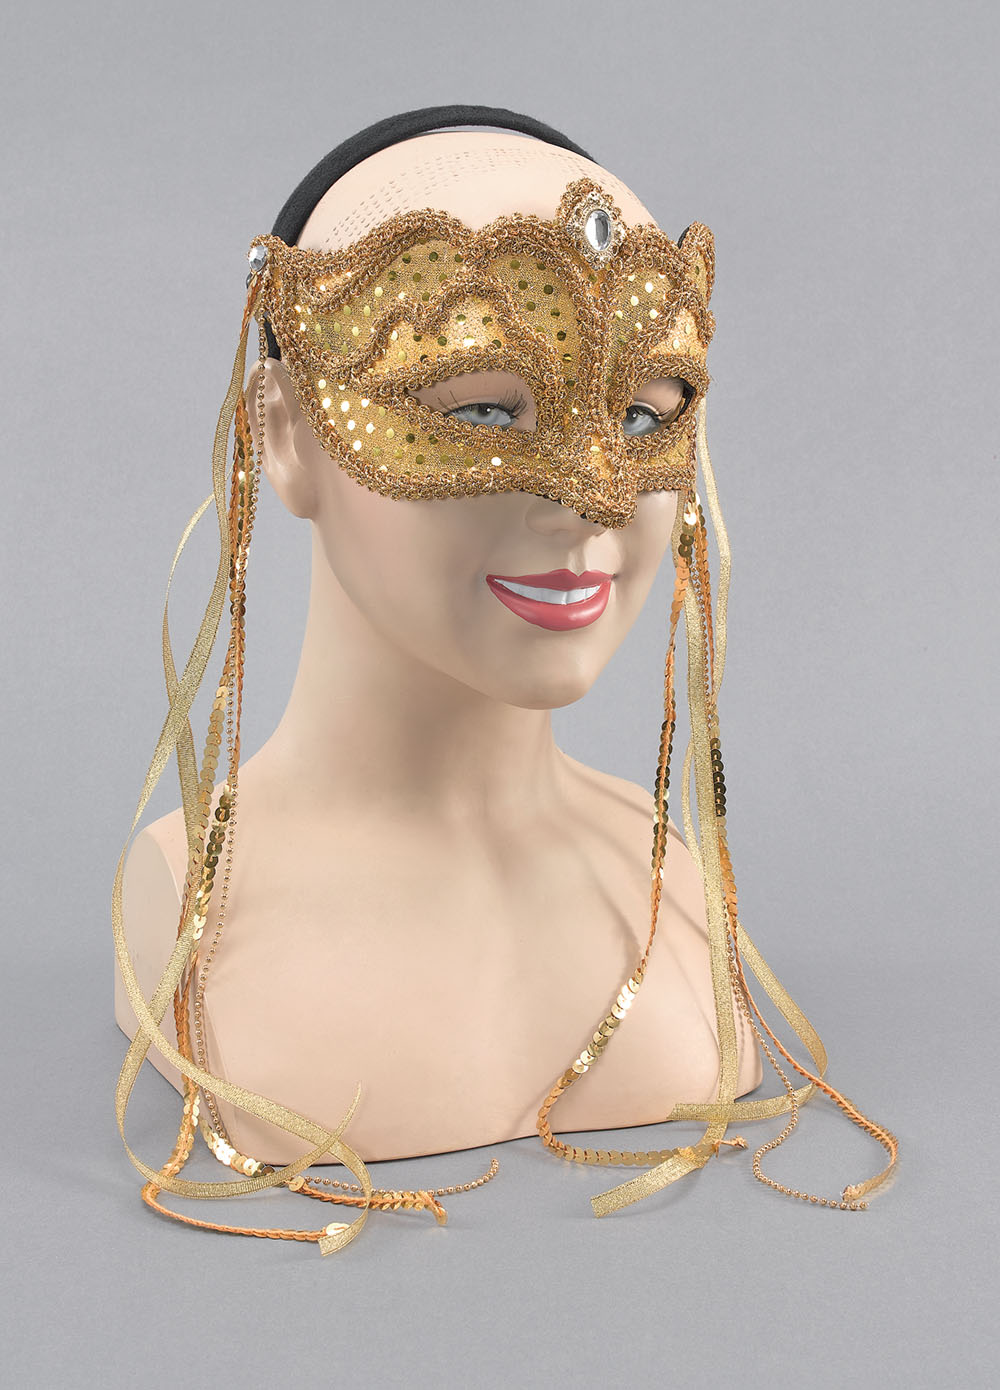 Gold Mask + Tassels On Headband